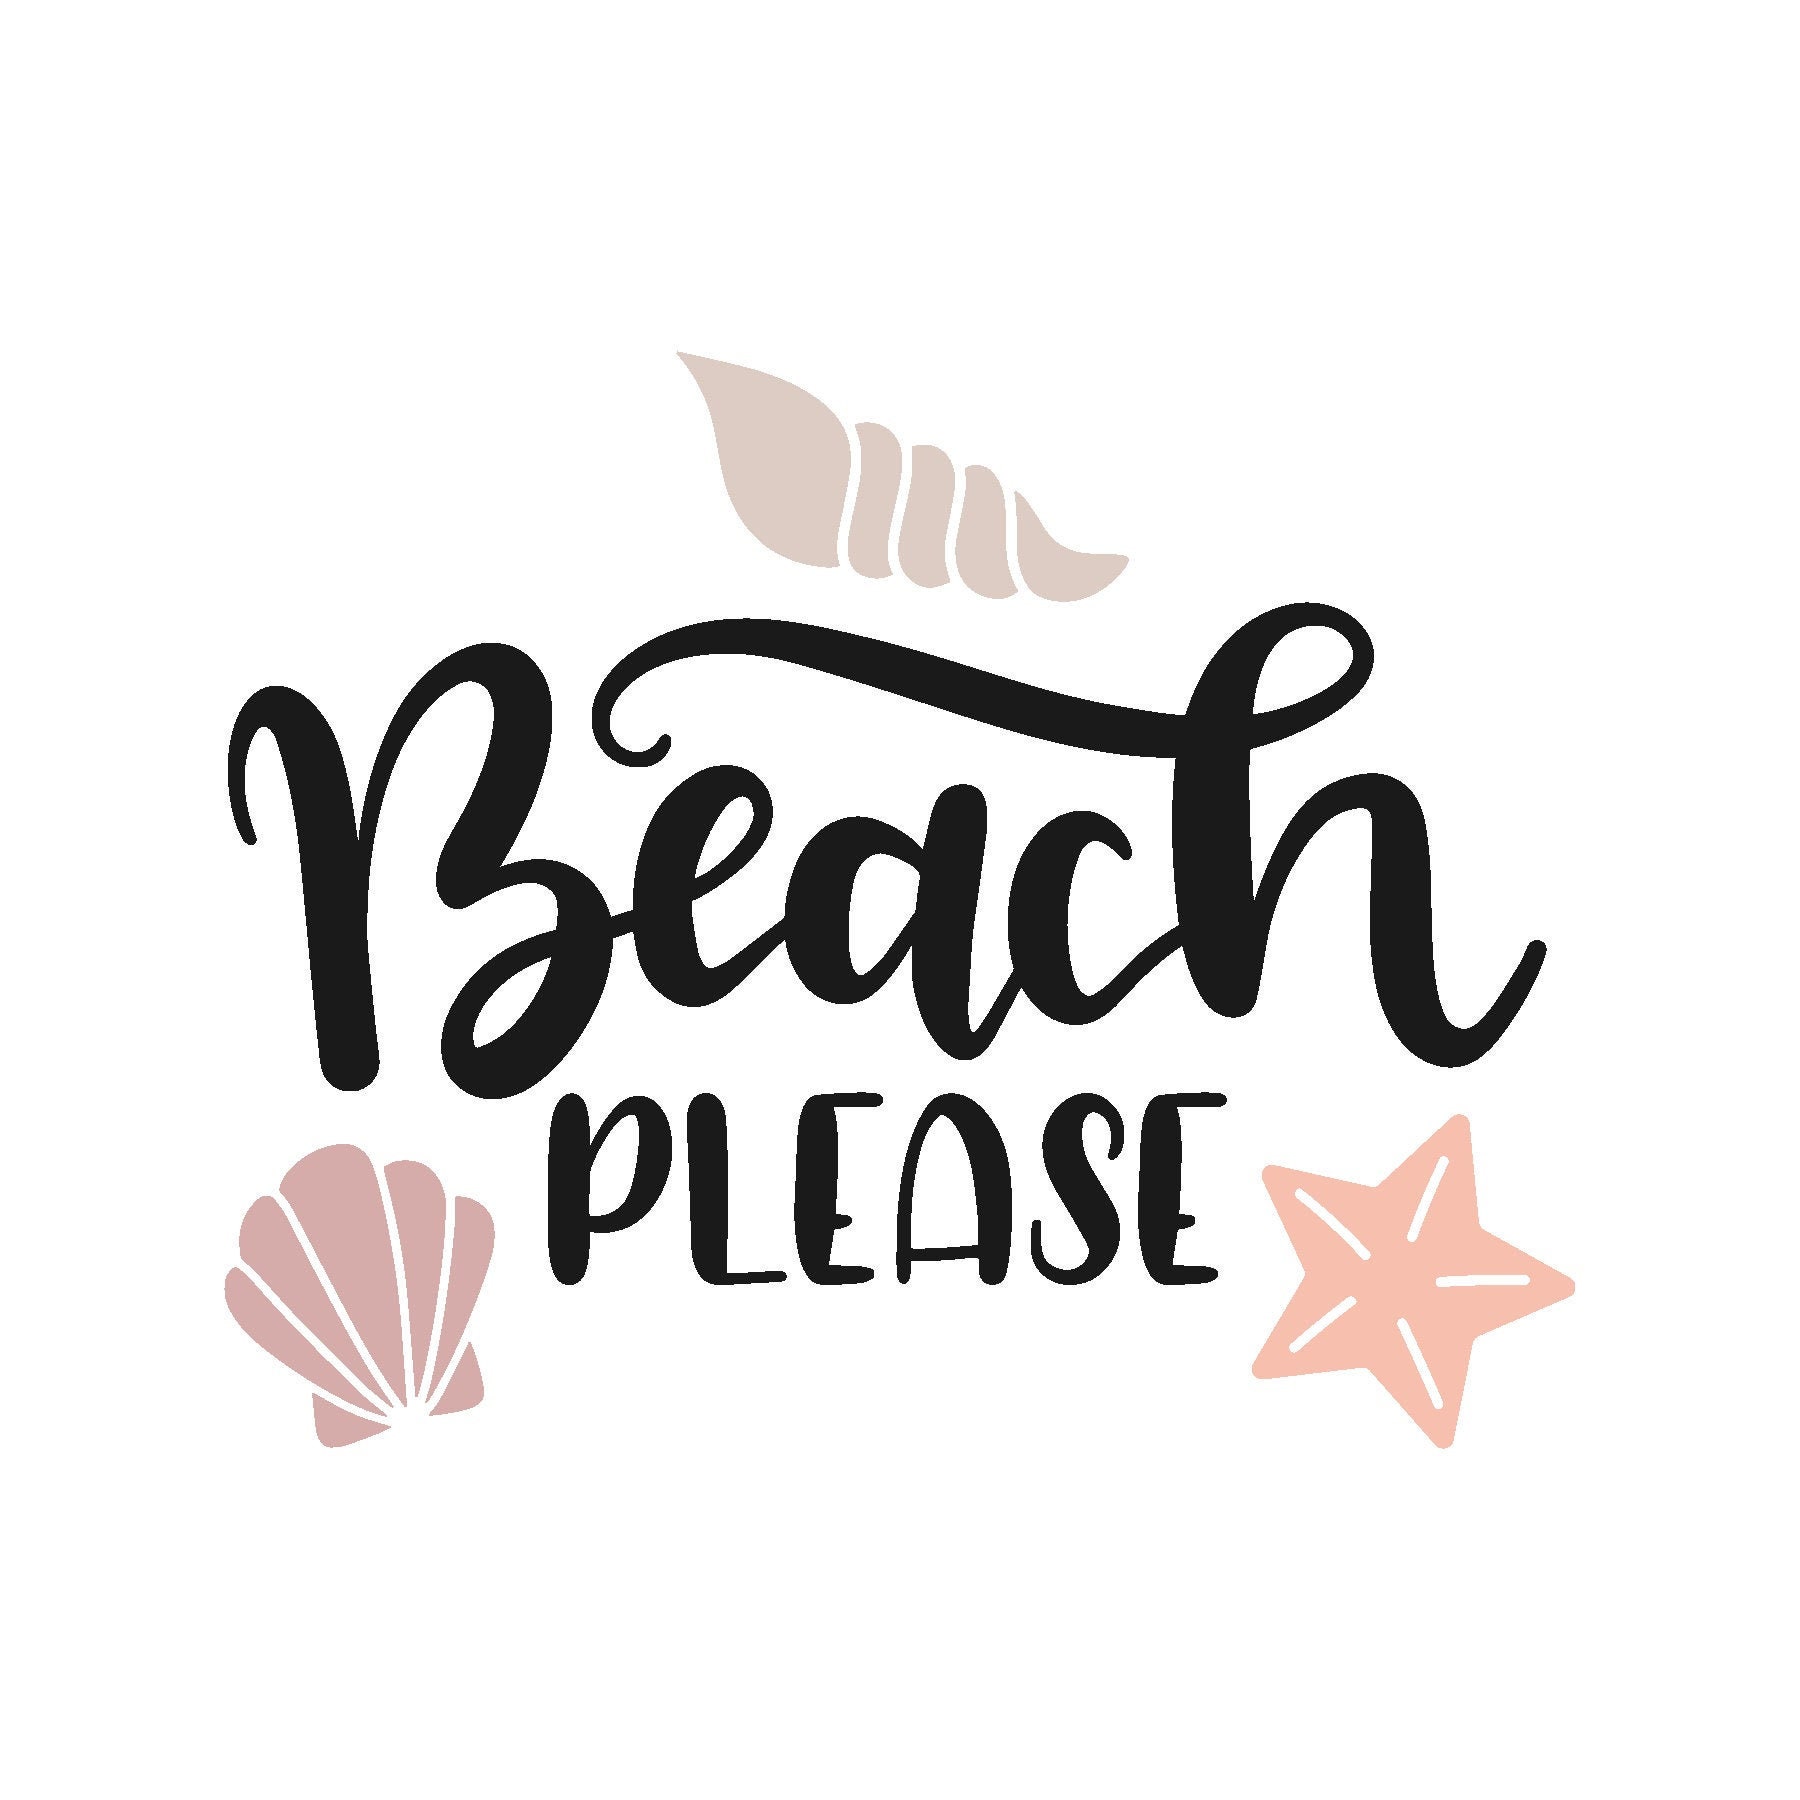 Бич плиз. Beach Life в svg. Beach please перевод. Beach please.